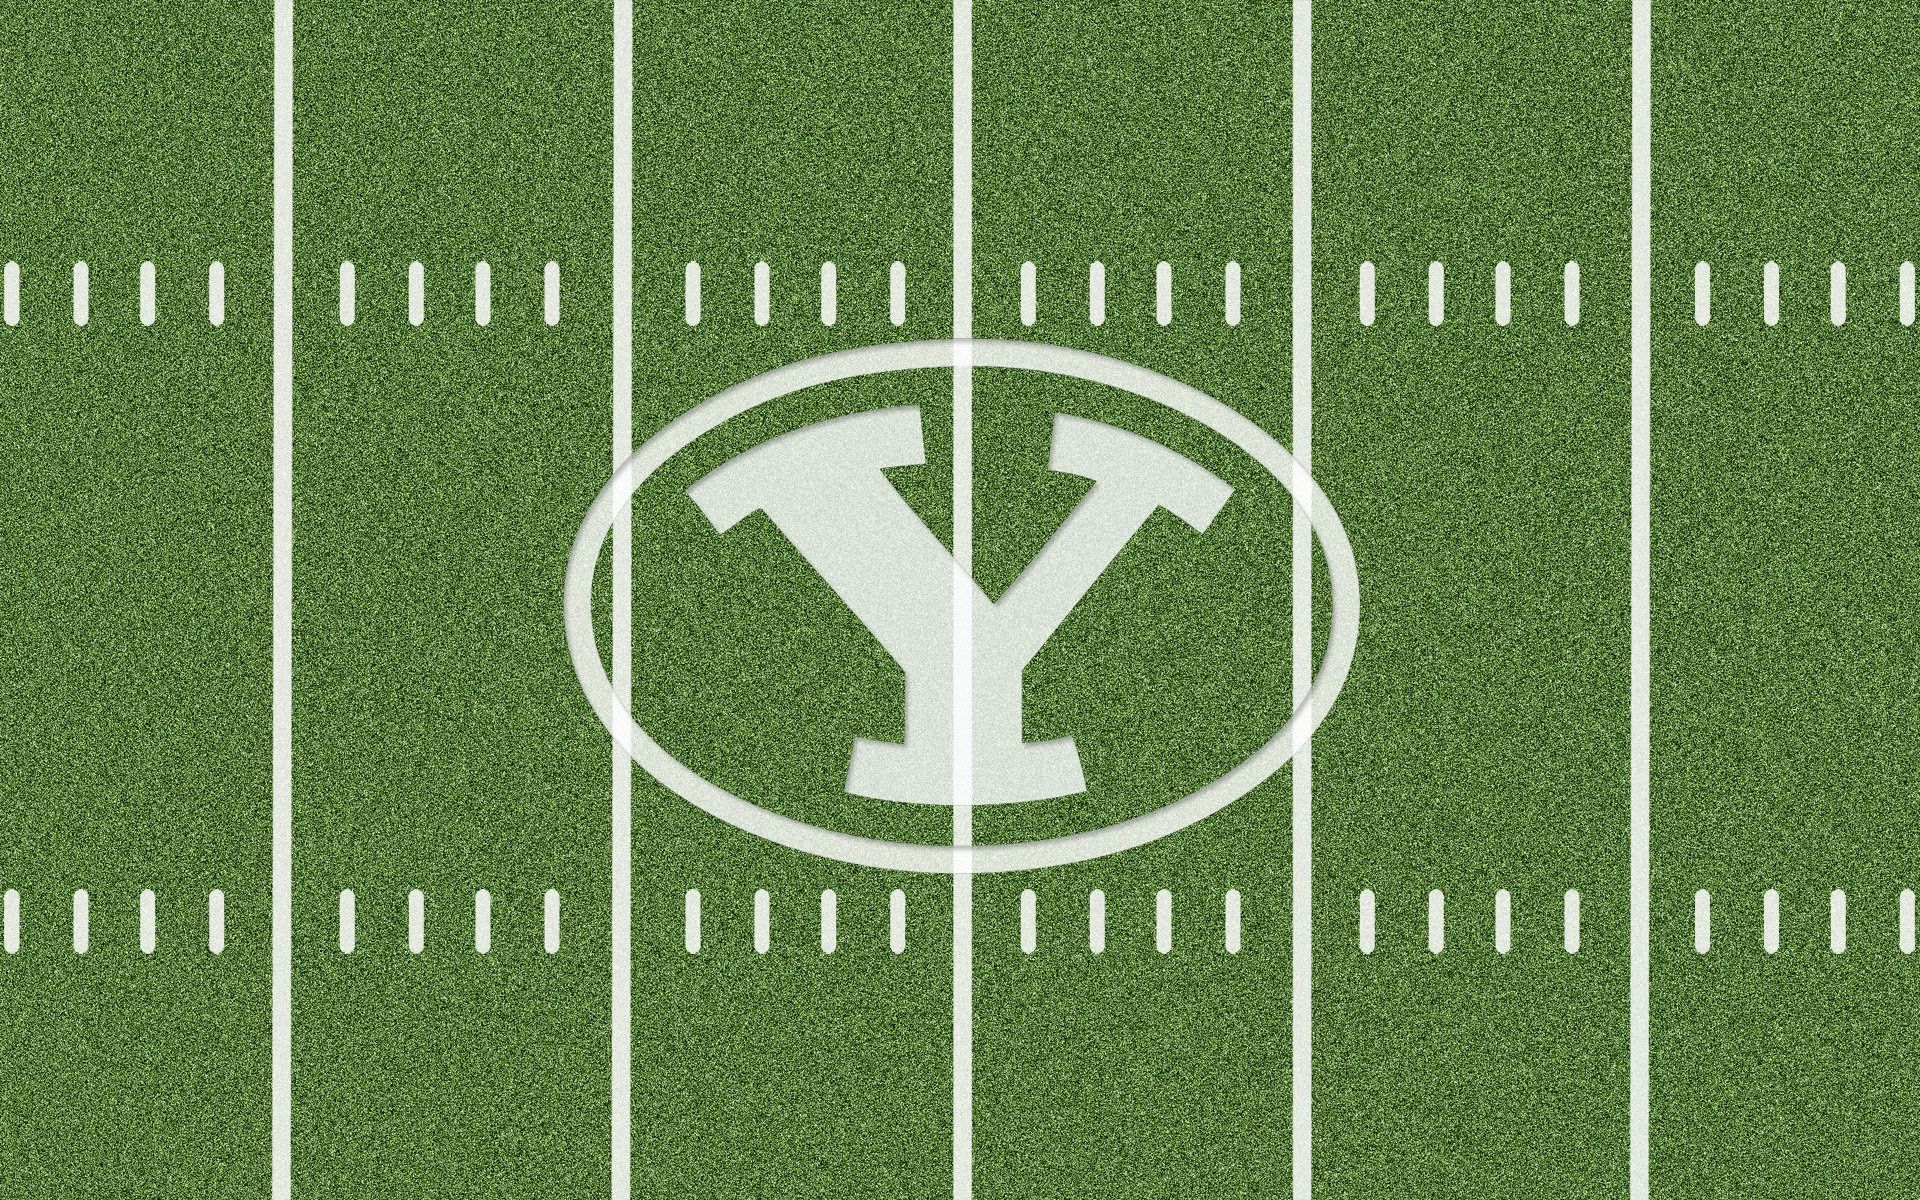 Byu Cougars Logo On Football Field Wallpaper Background Desktop